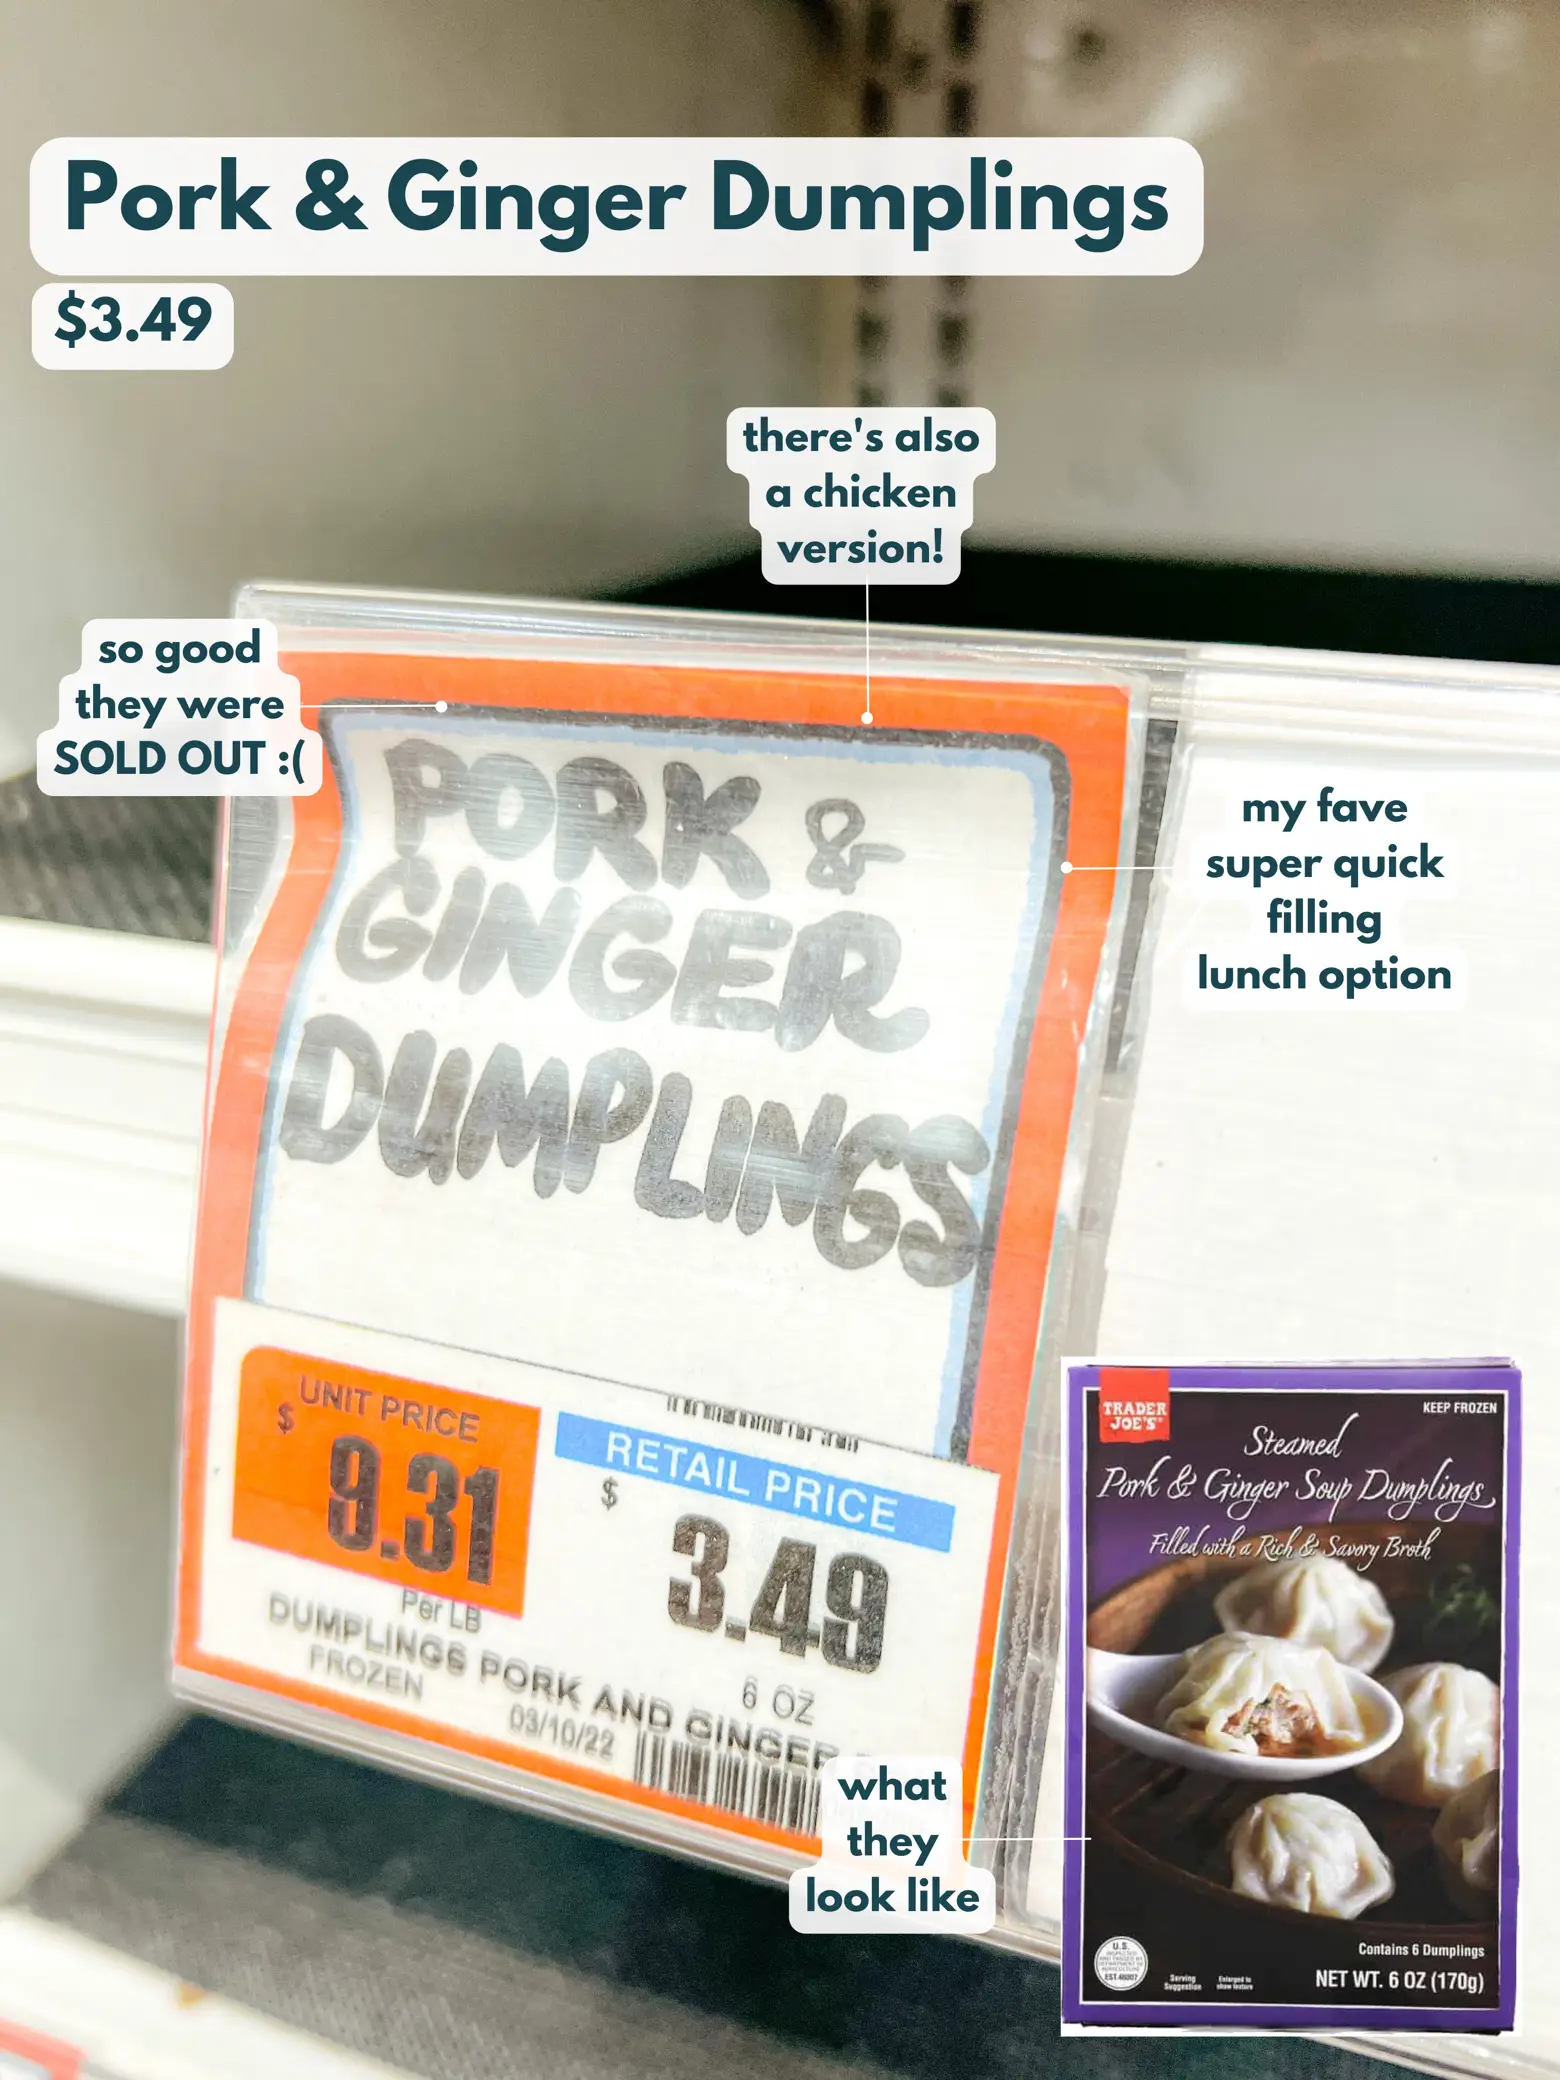 We Tried Trader Joe's Pork and Ginger Soup Dumplings - DailyWaffle